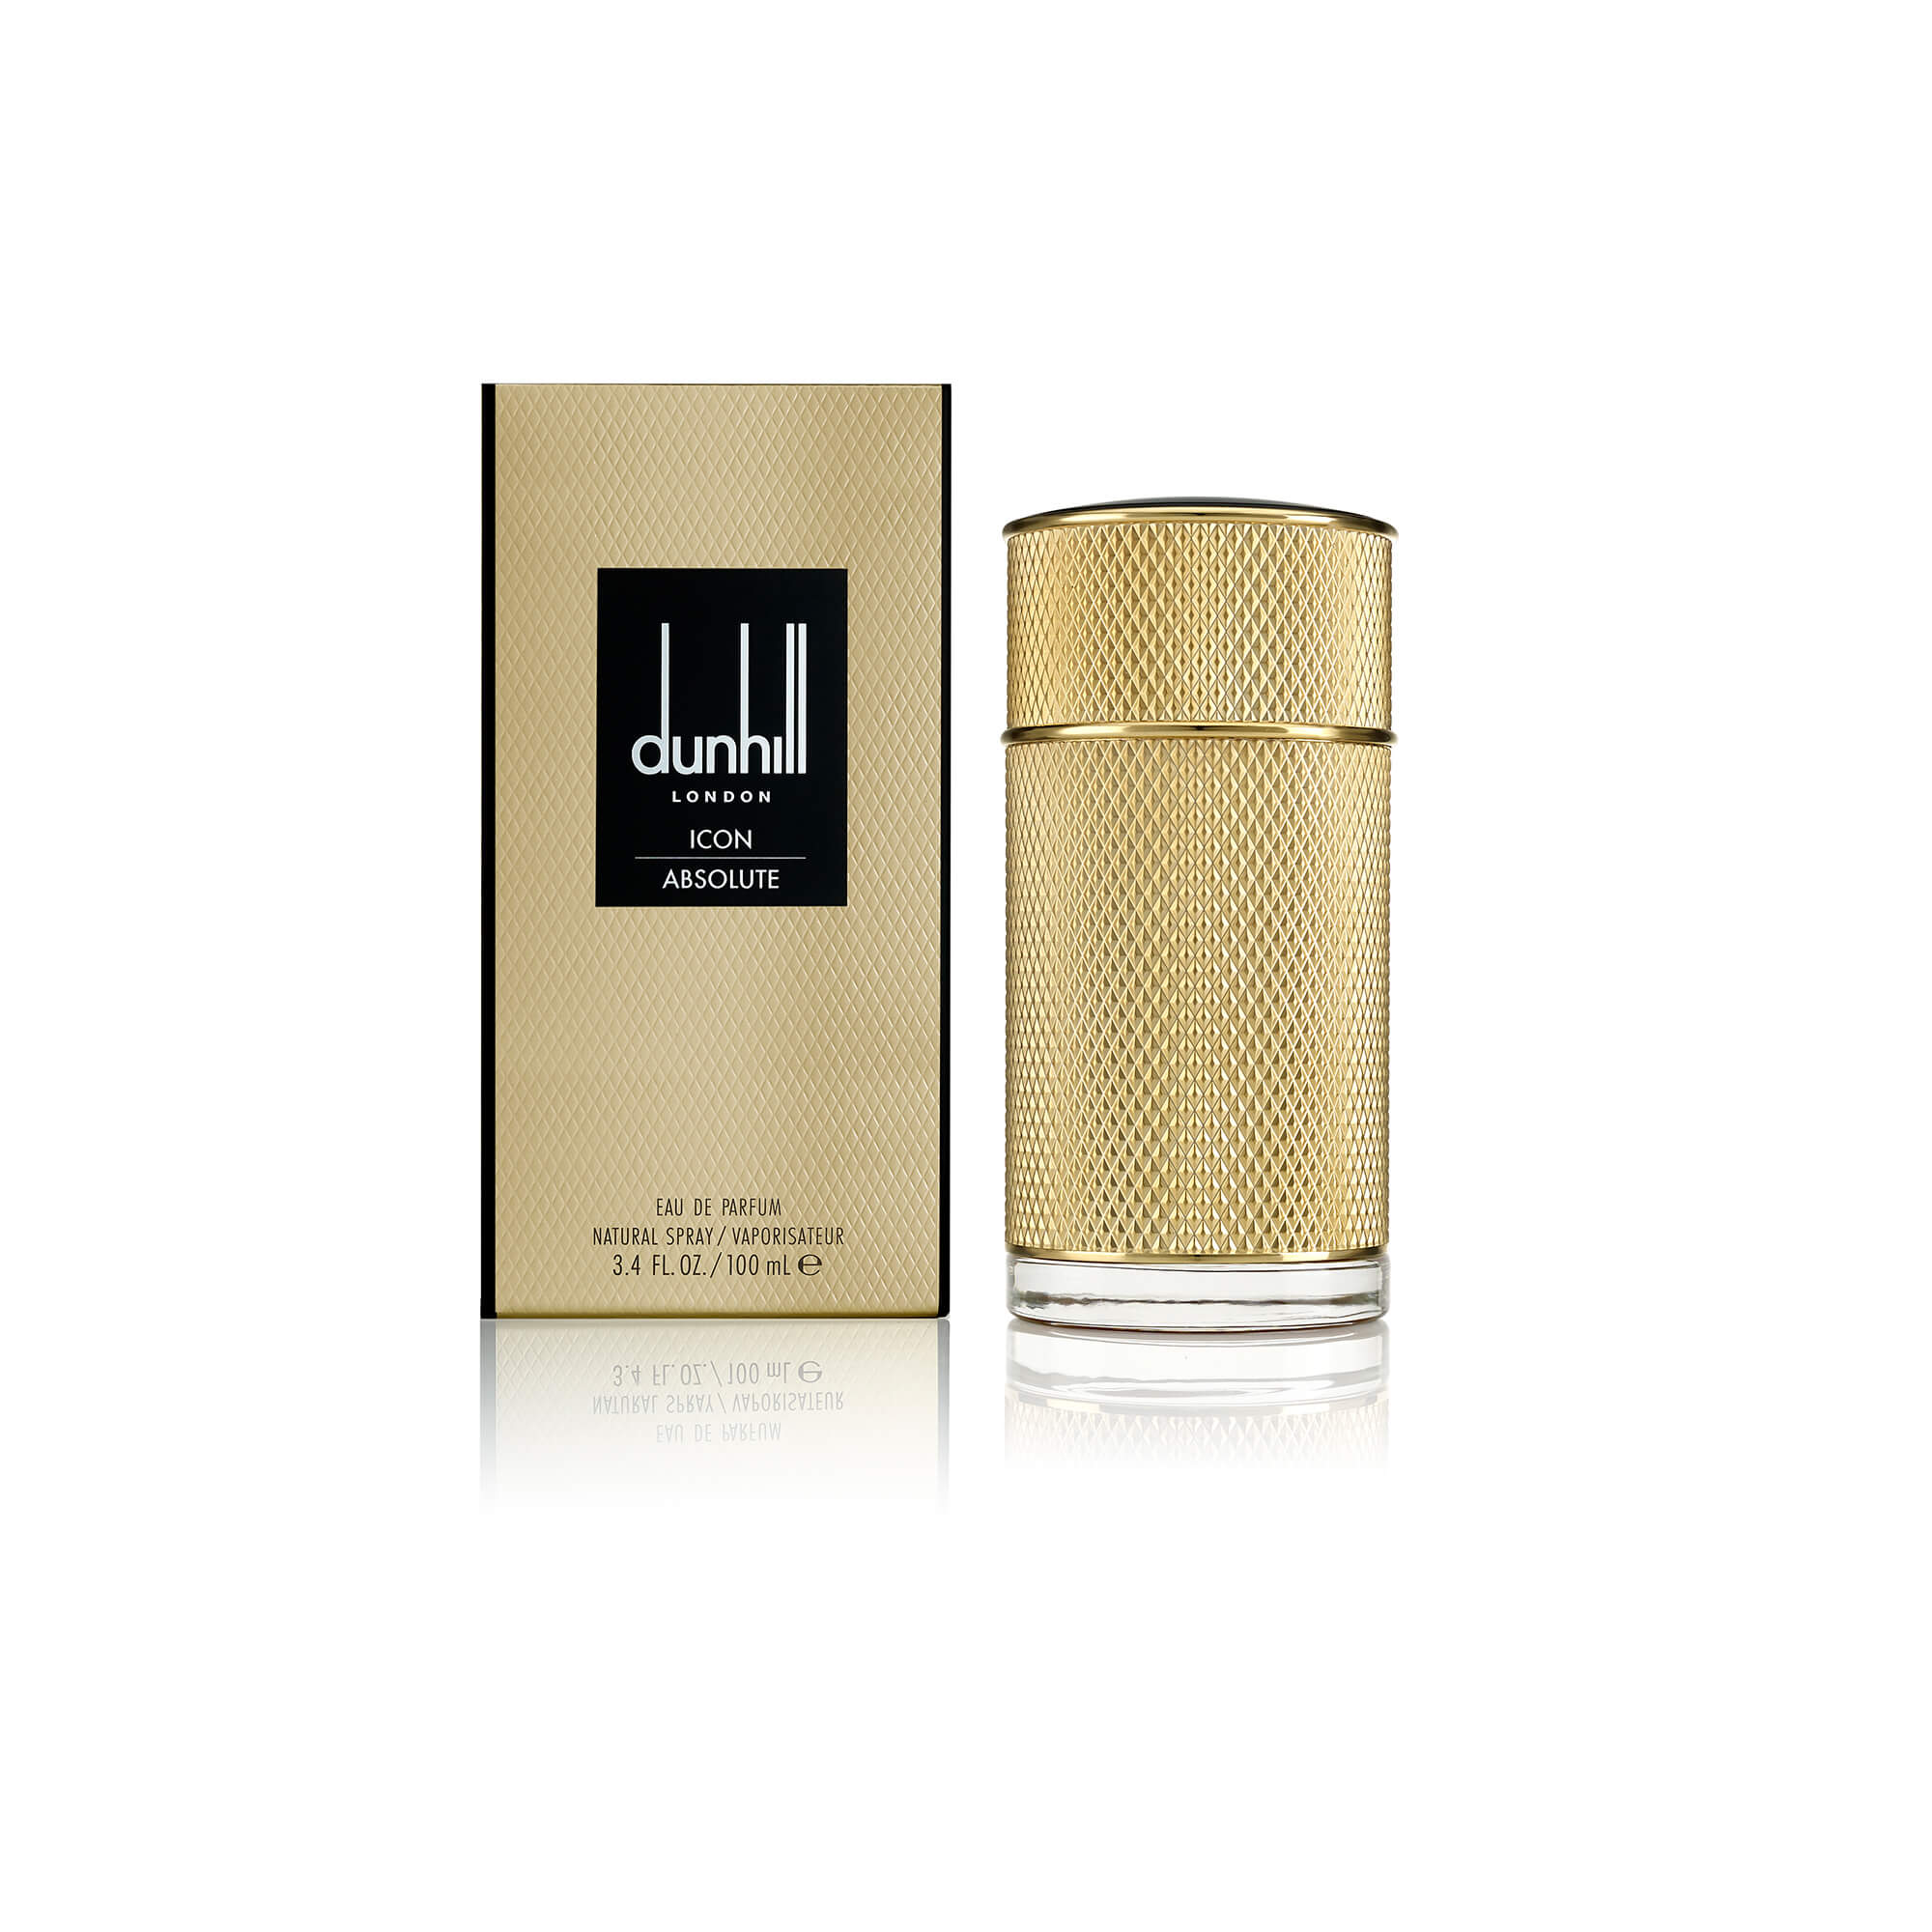 DUNHILL Icon Absolute - Eau De Parfum Spray 100ml - Pulse Of Perfumery